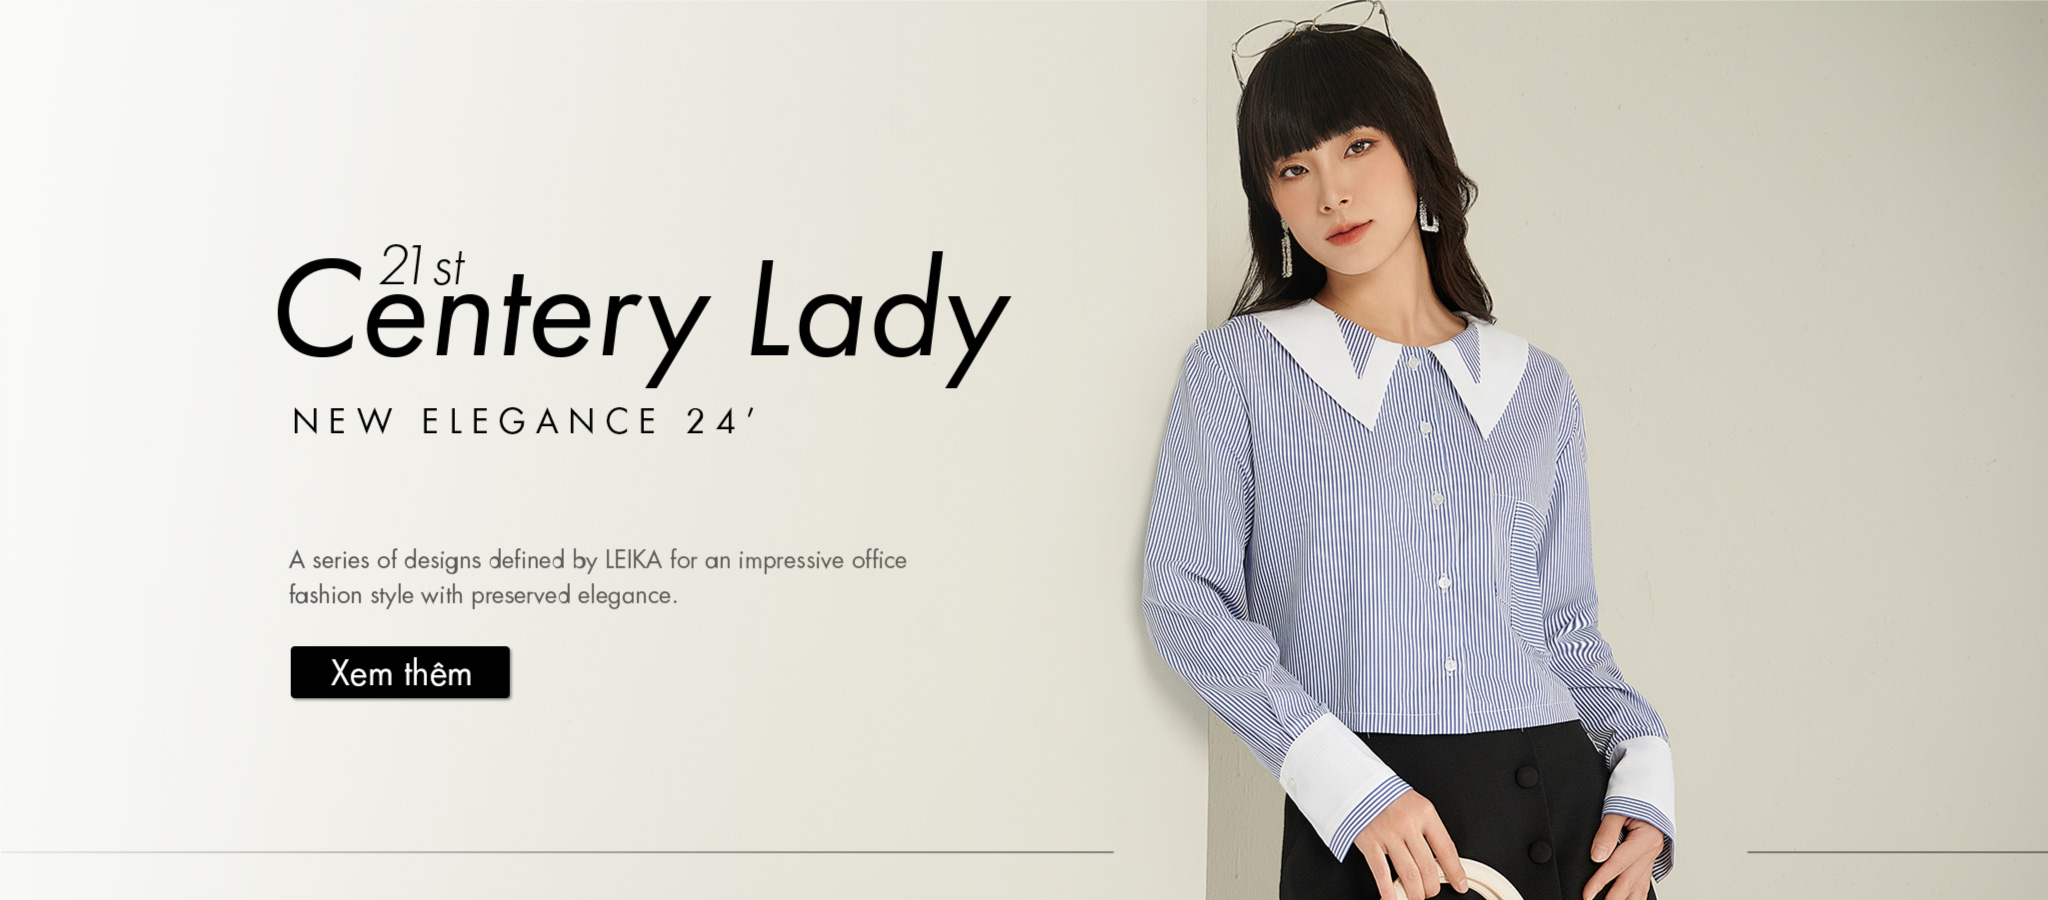 21st Century Lady - New elegance 24‘